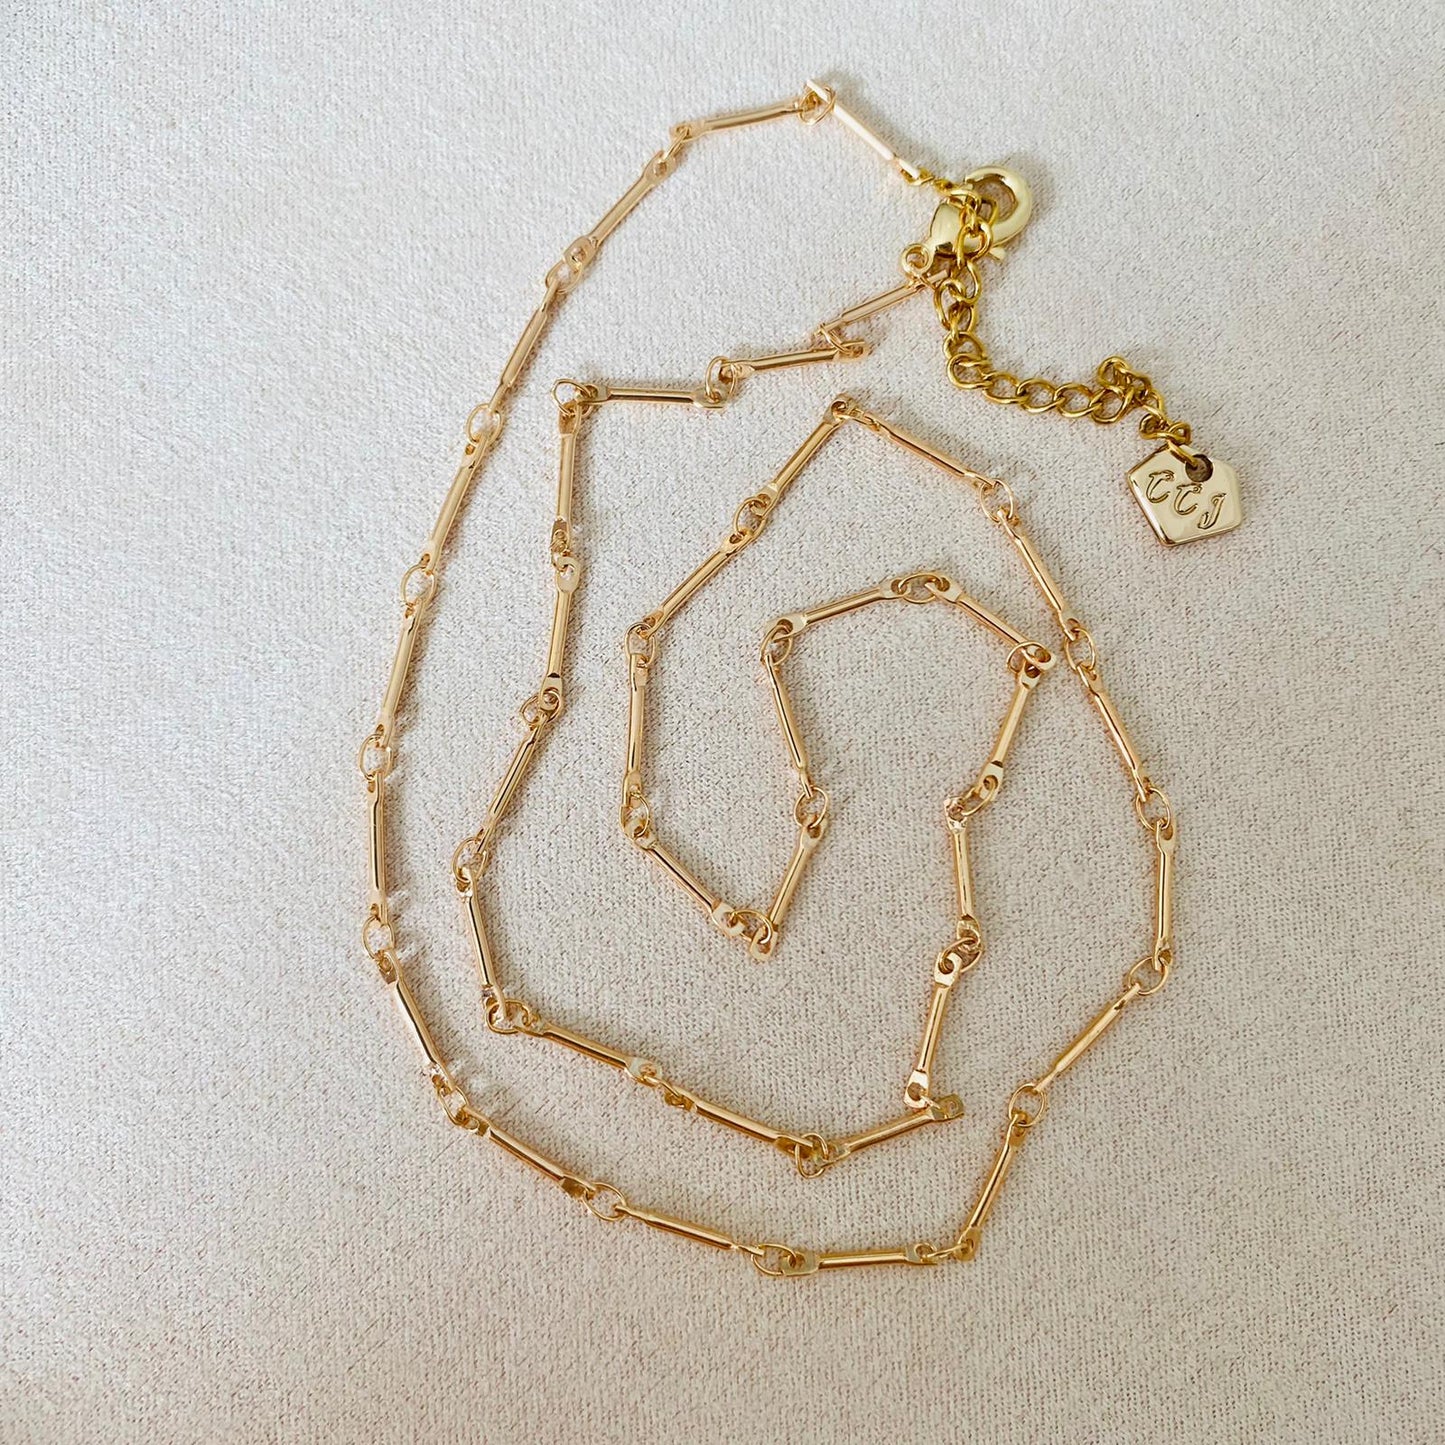 Slim Jane Necklace Chain